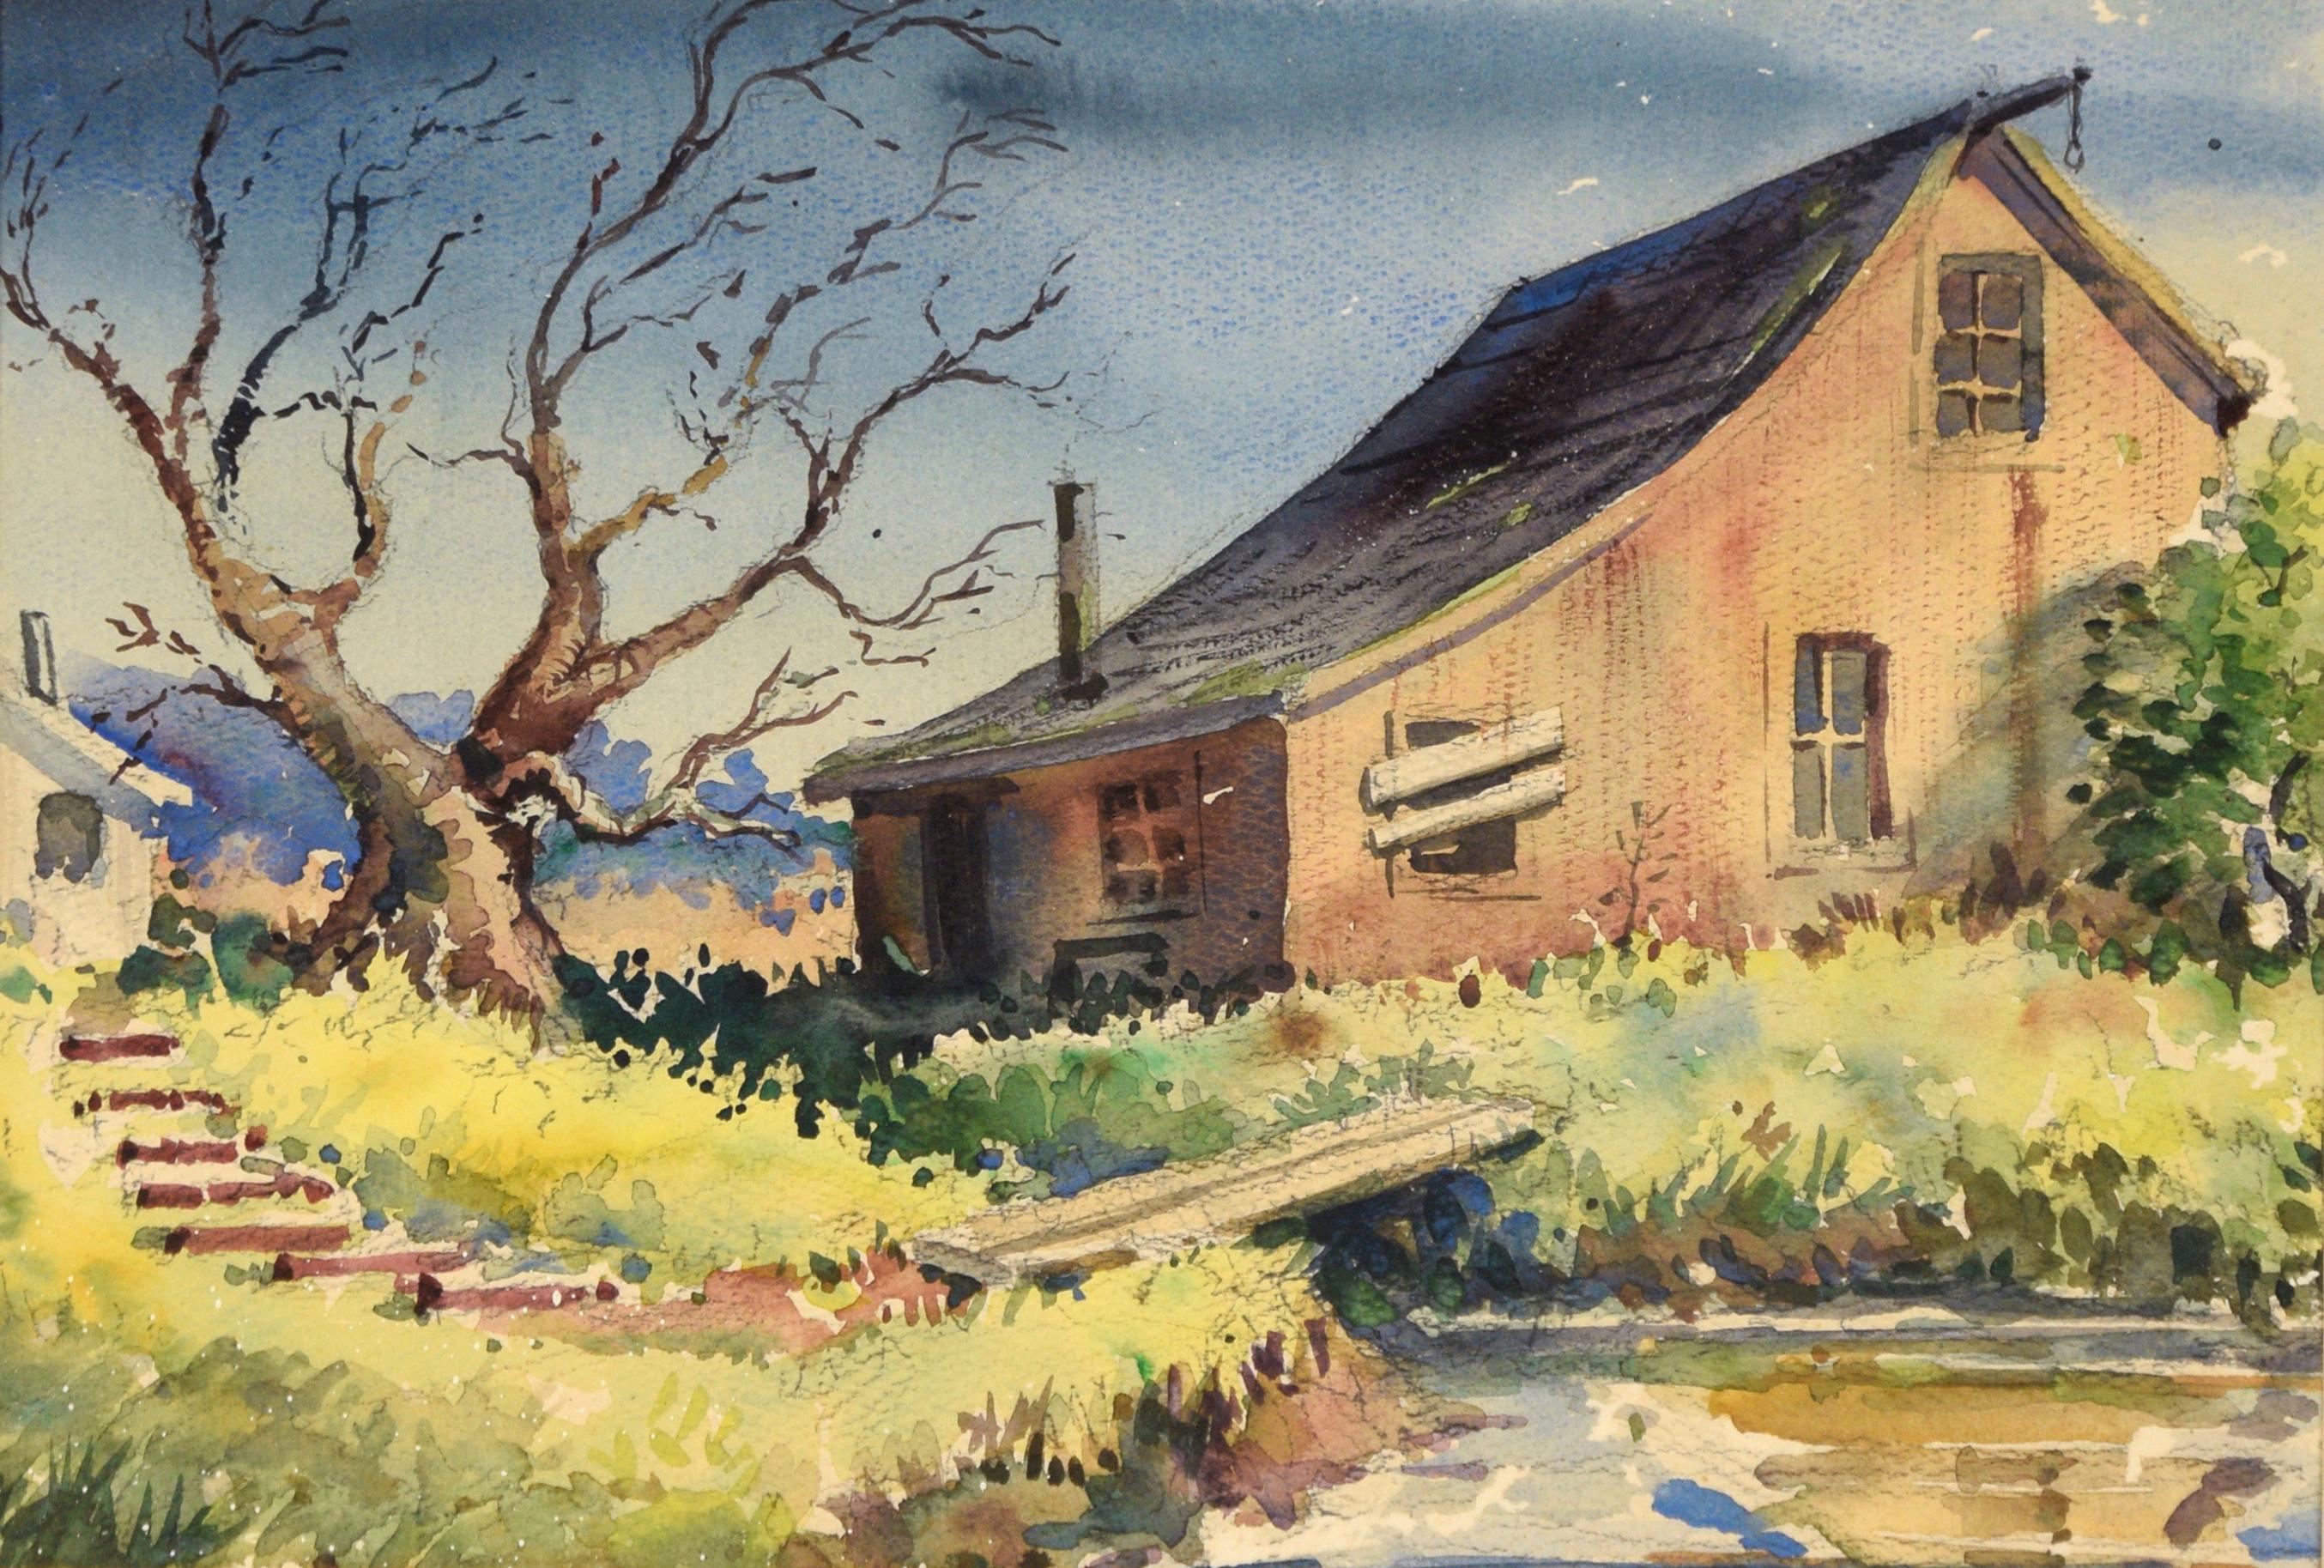 The Old Barn - Farmhouse Landscape in Watercolor on Paper - Art by Edwin Haas